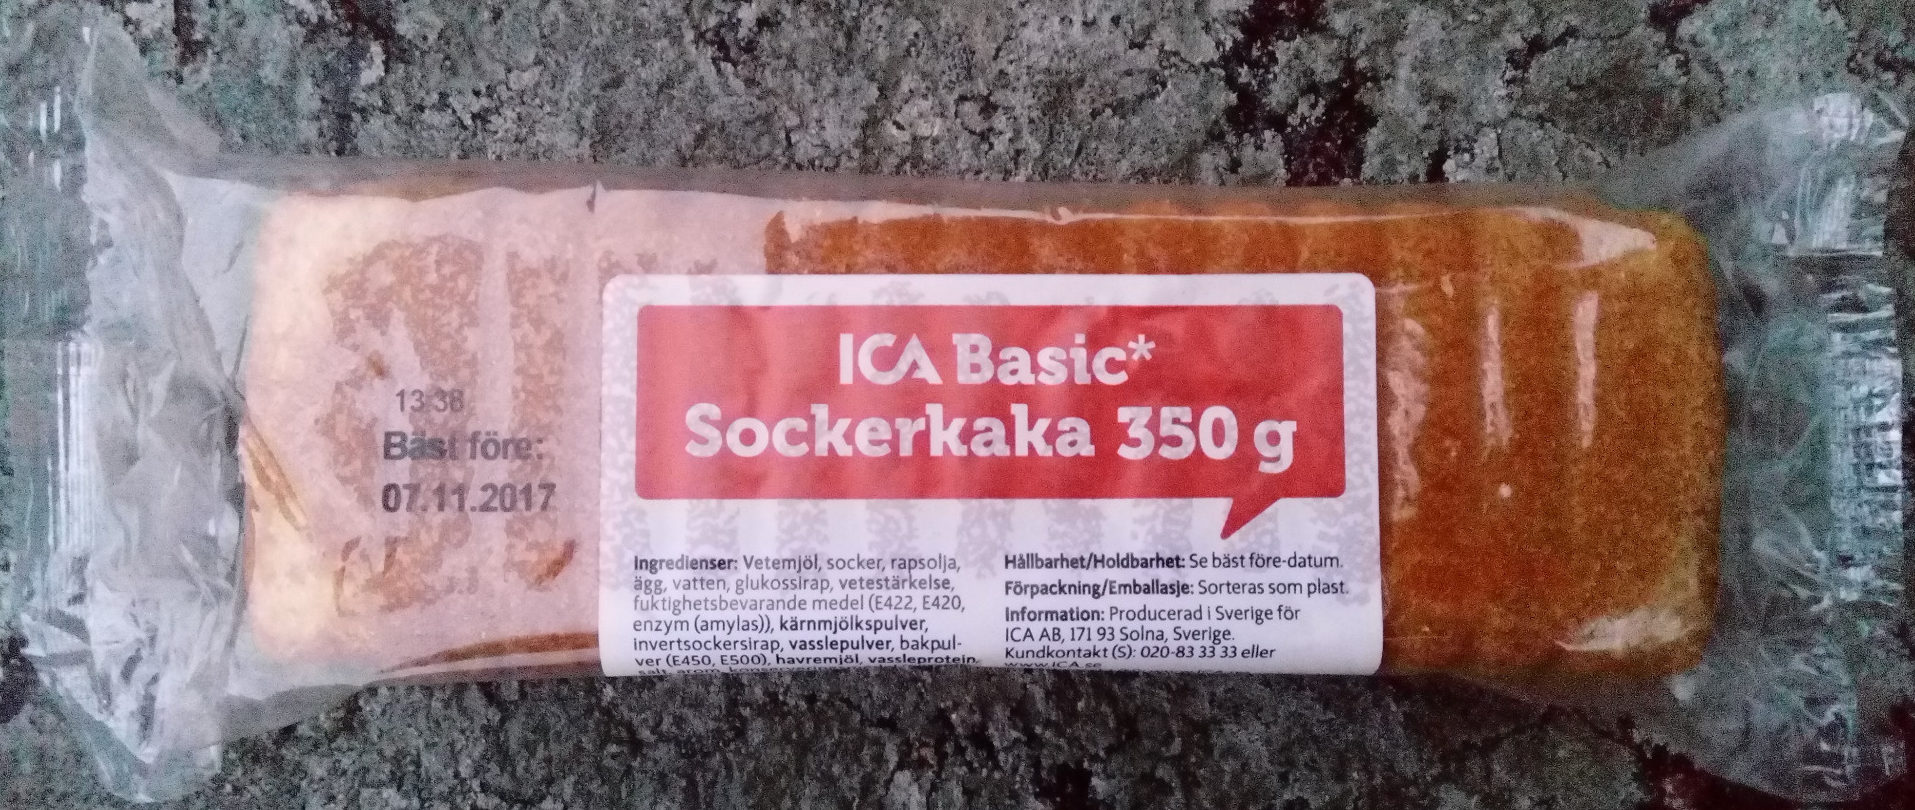 ICA Basic Sockerkaka - Product - sv